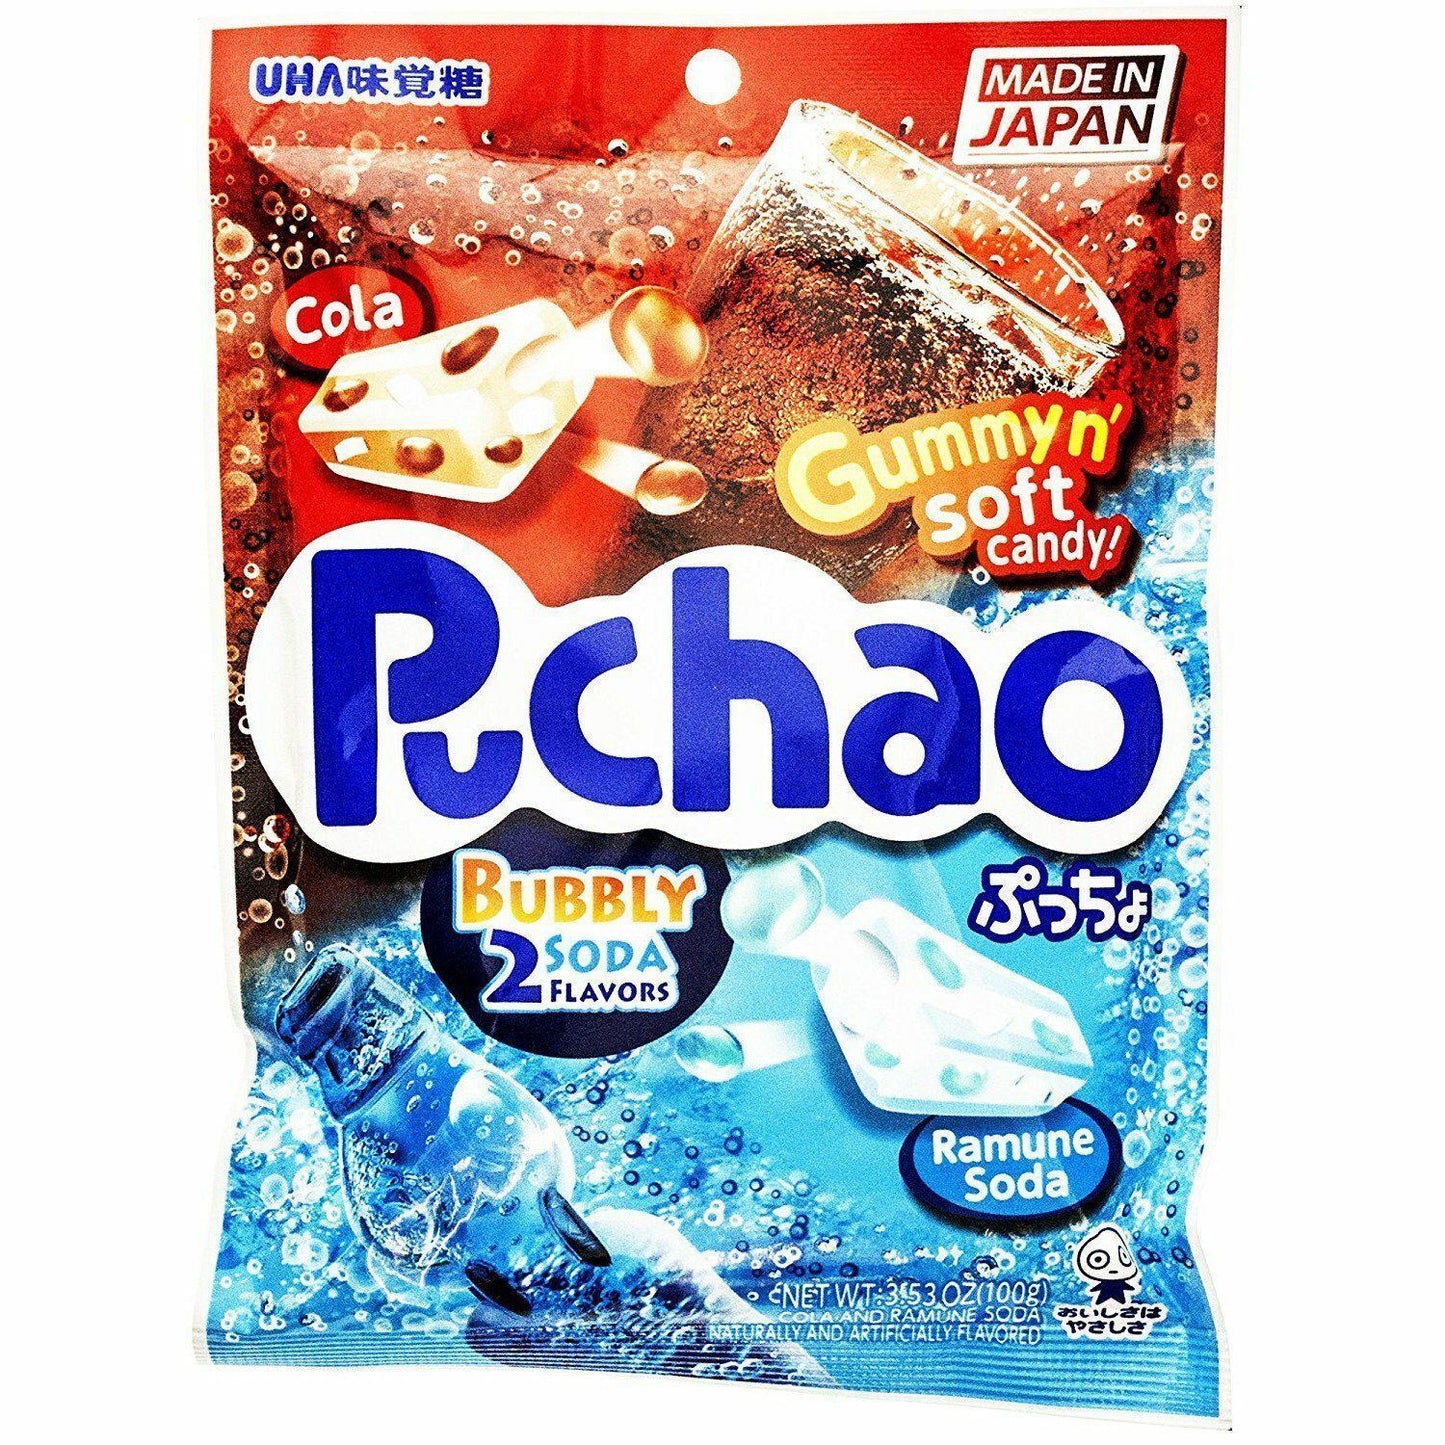 UHA Puchao Cola & Soda Gummy Soft Candy